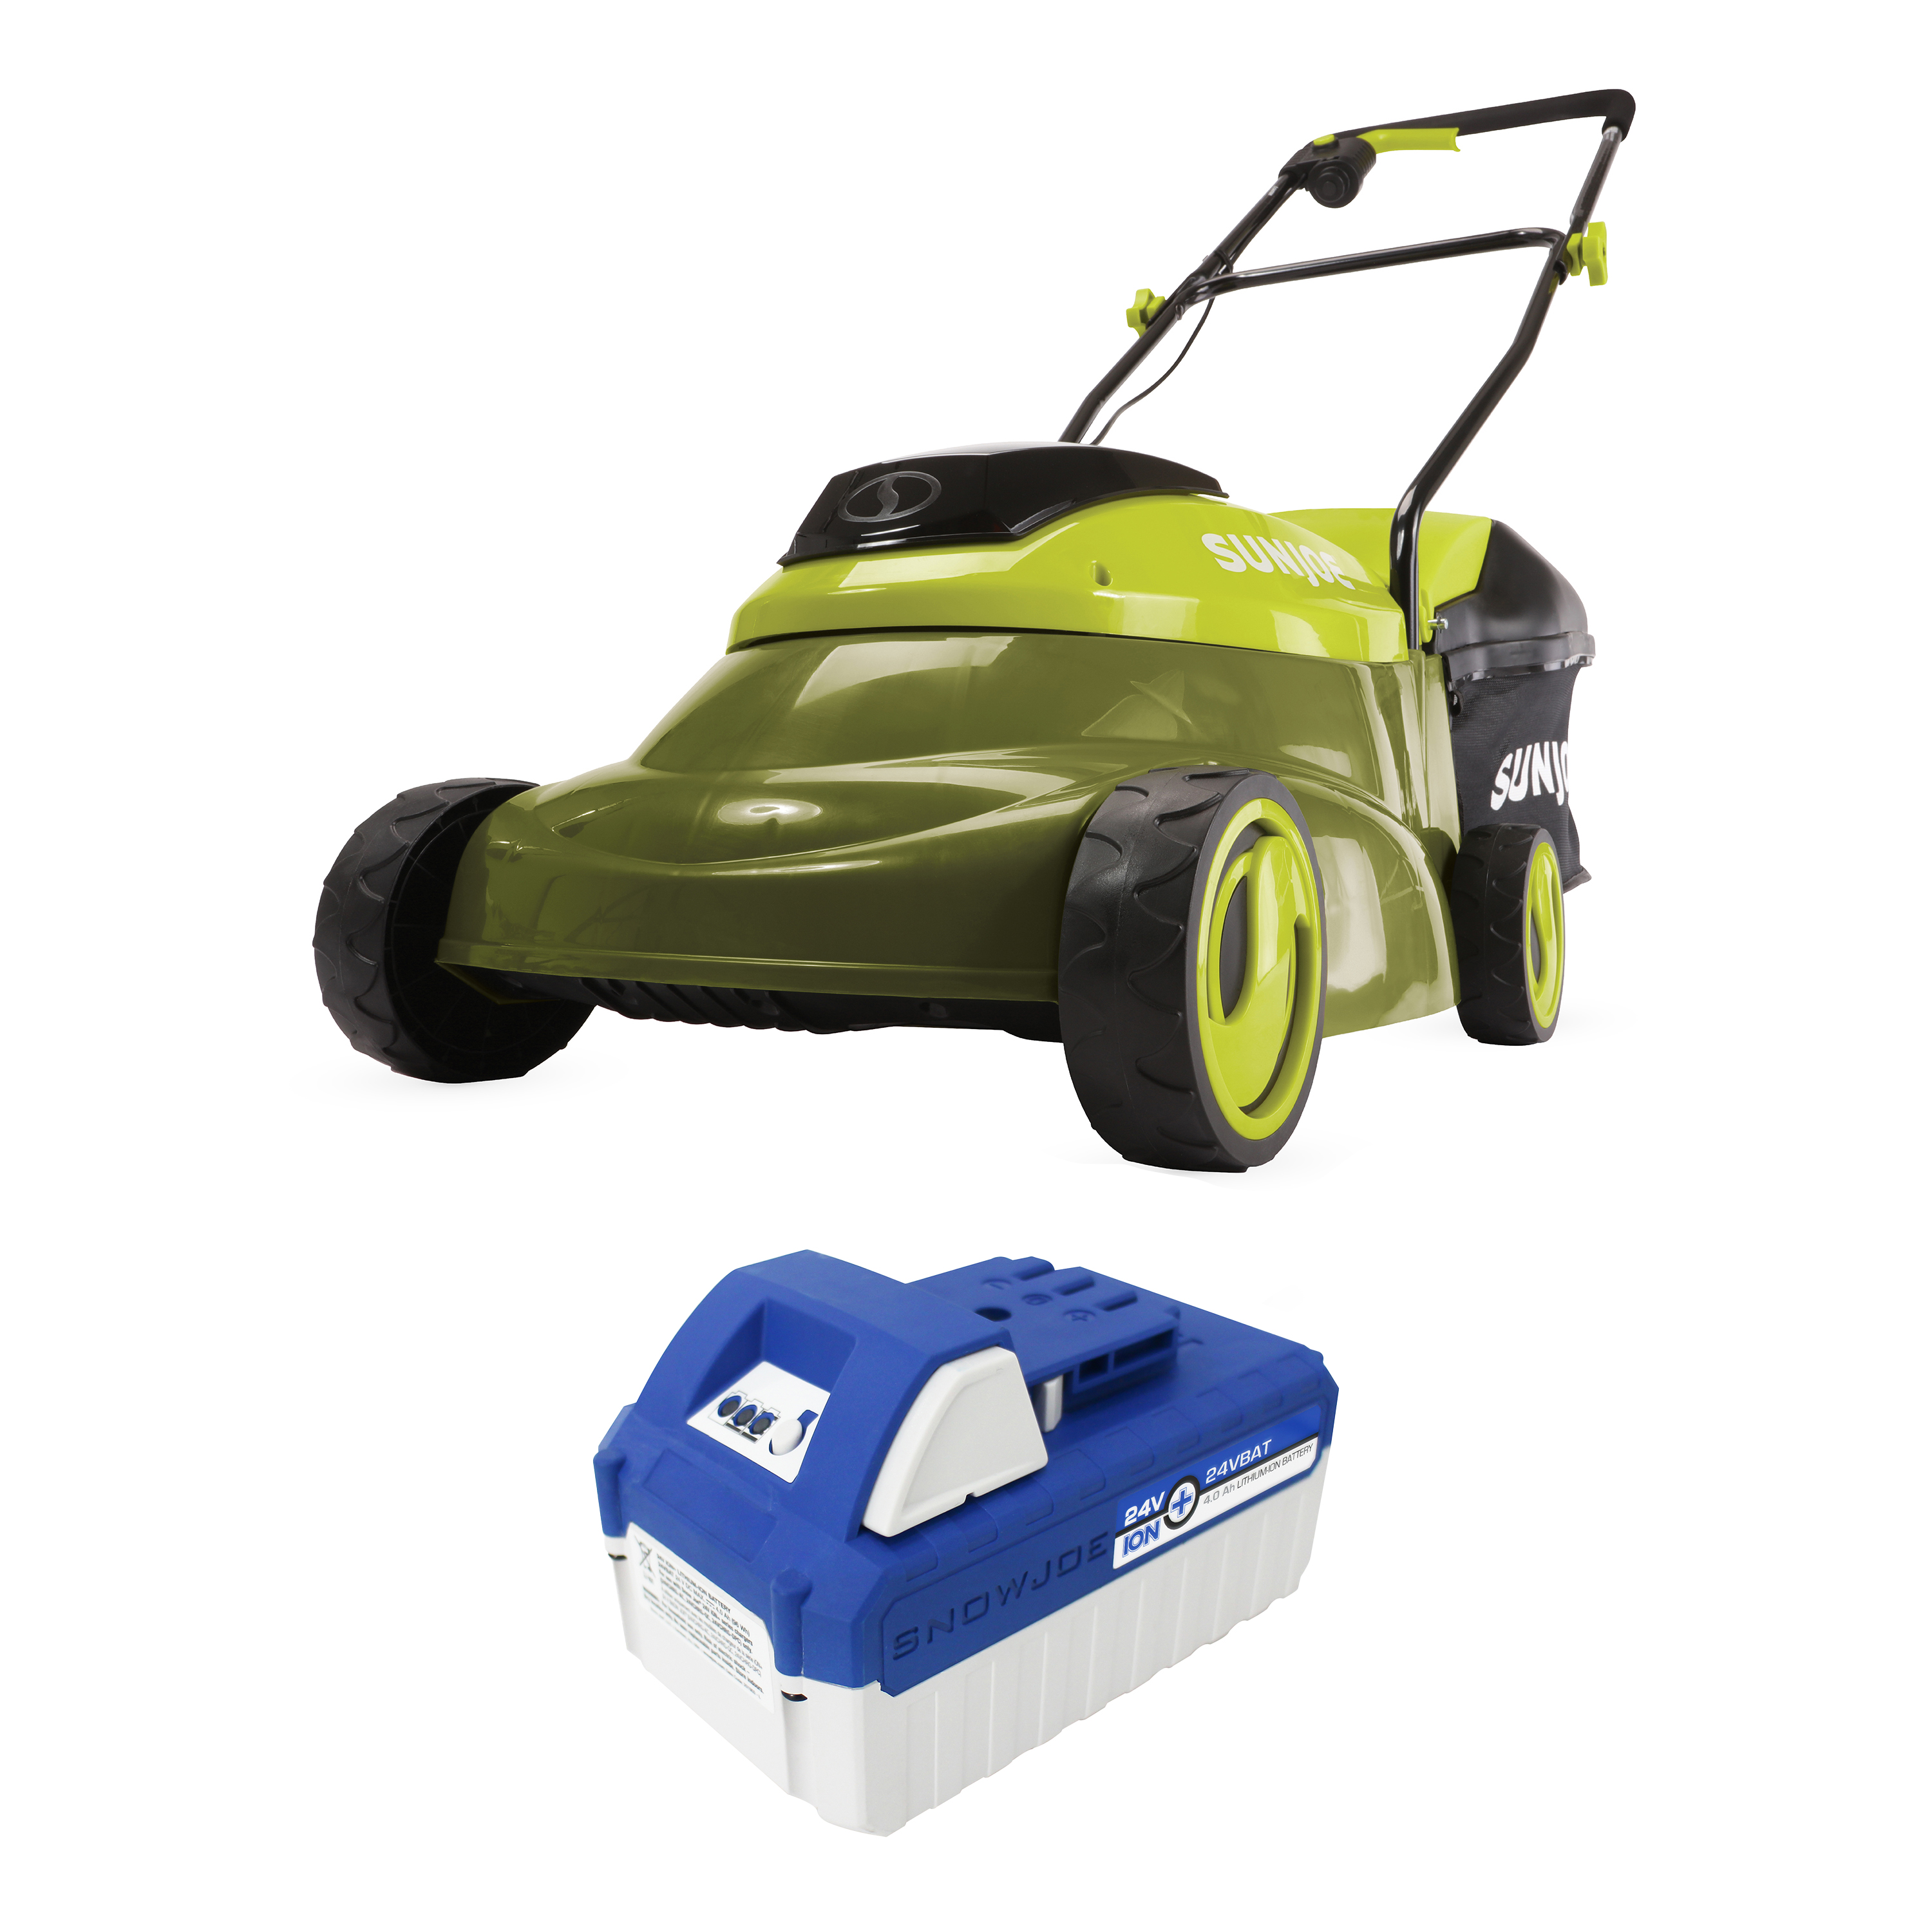 Sun Joe Lawn Mower Parts & Accessories - Lawn Mowers 